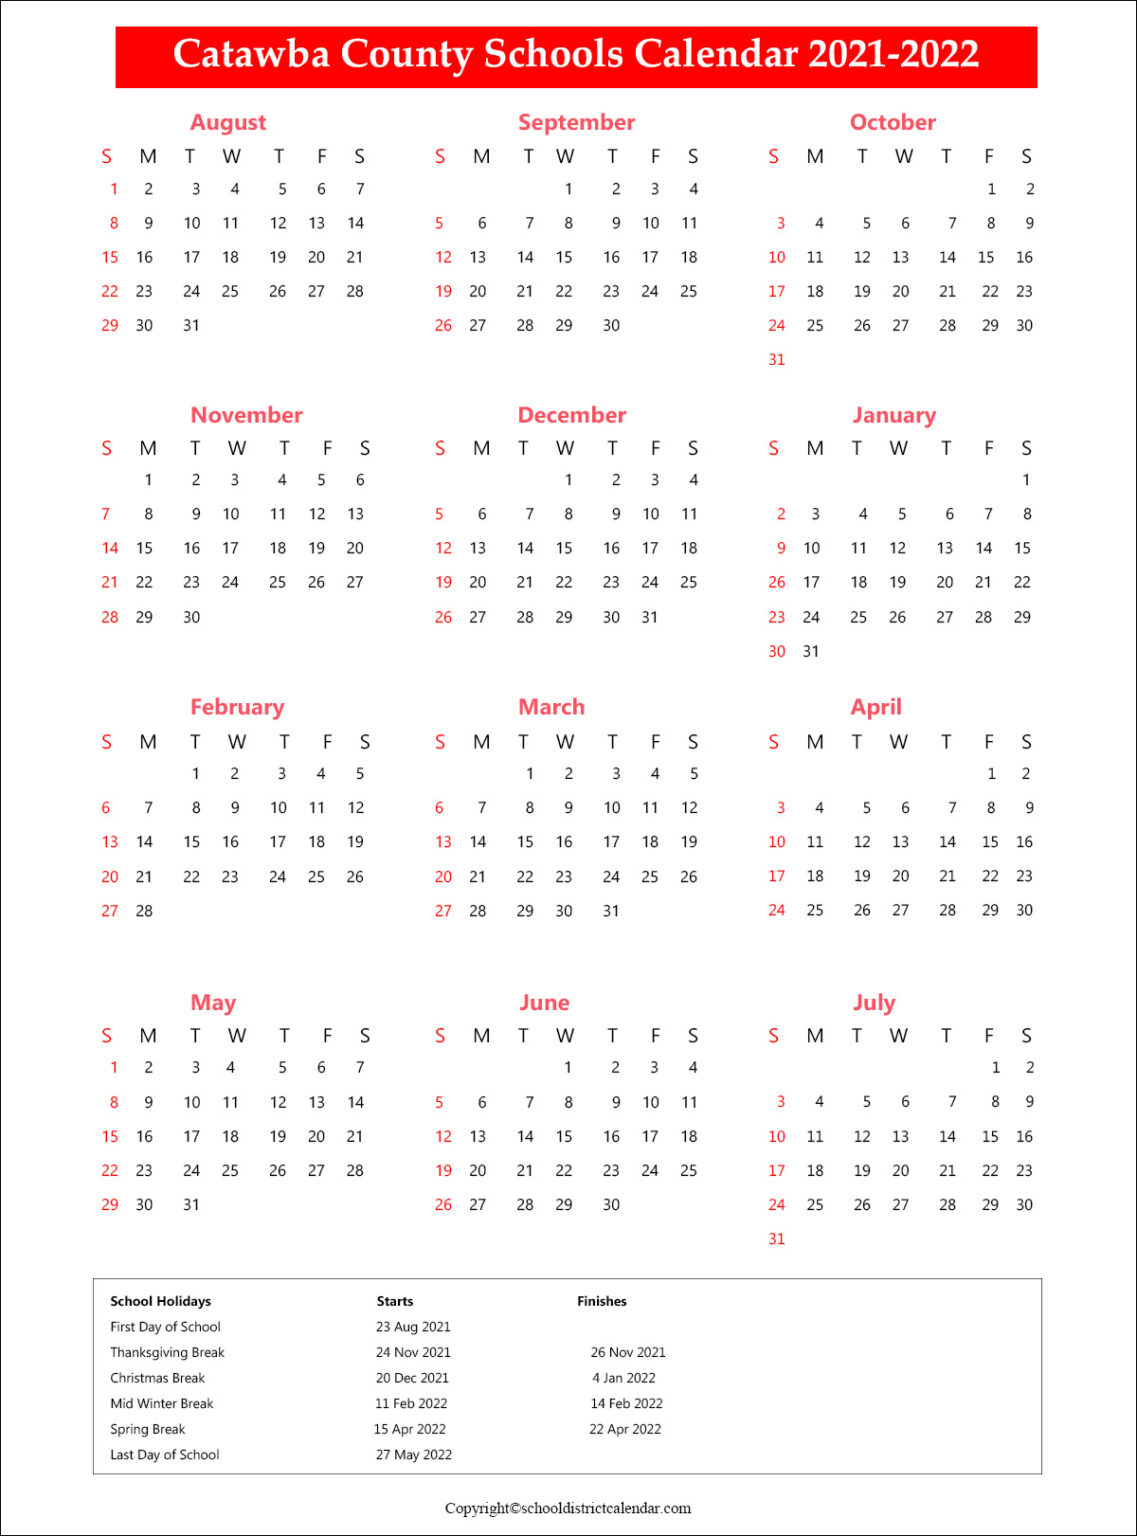 Catawba County Schools District Calendar Holidays 2021 2022